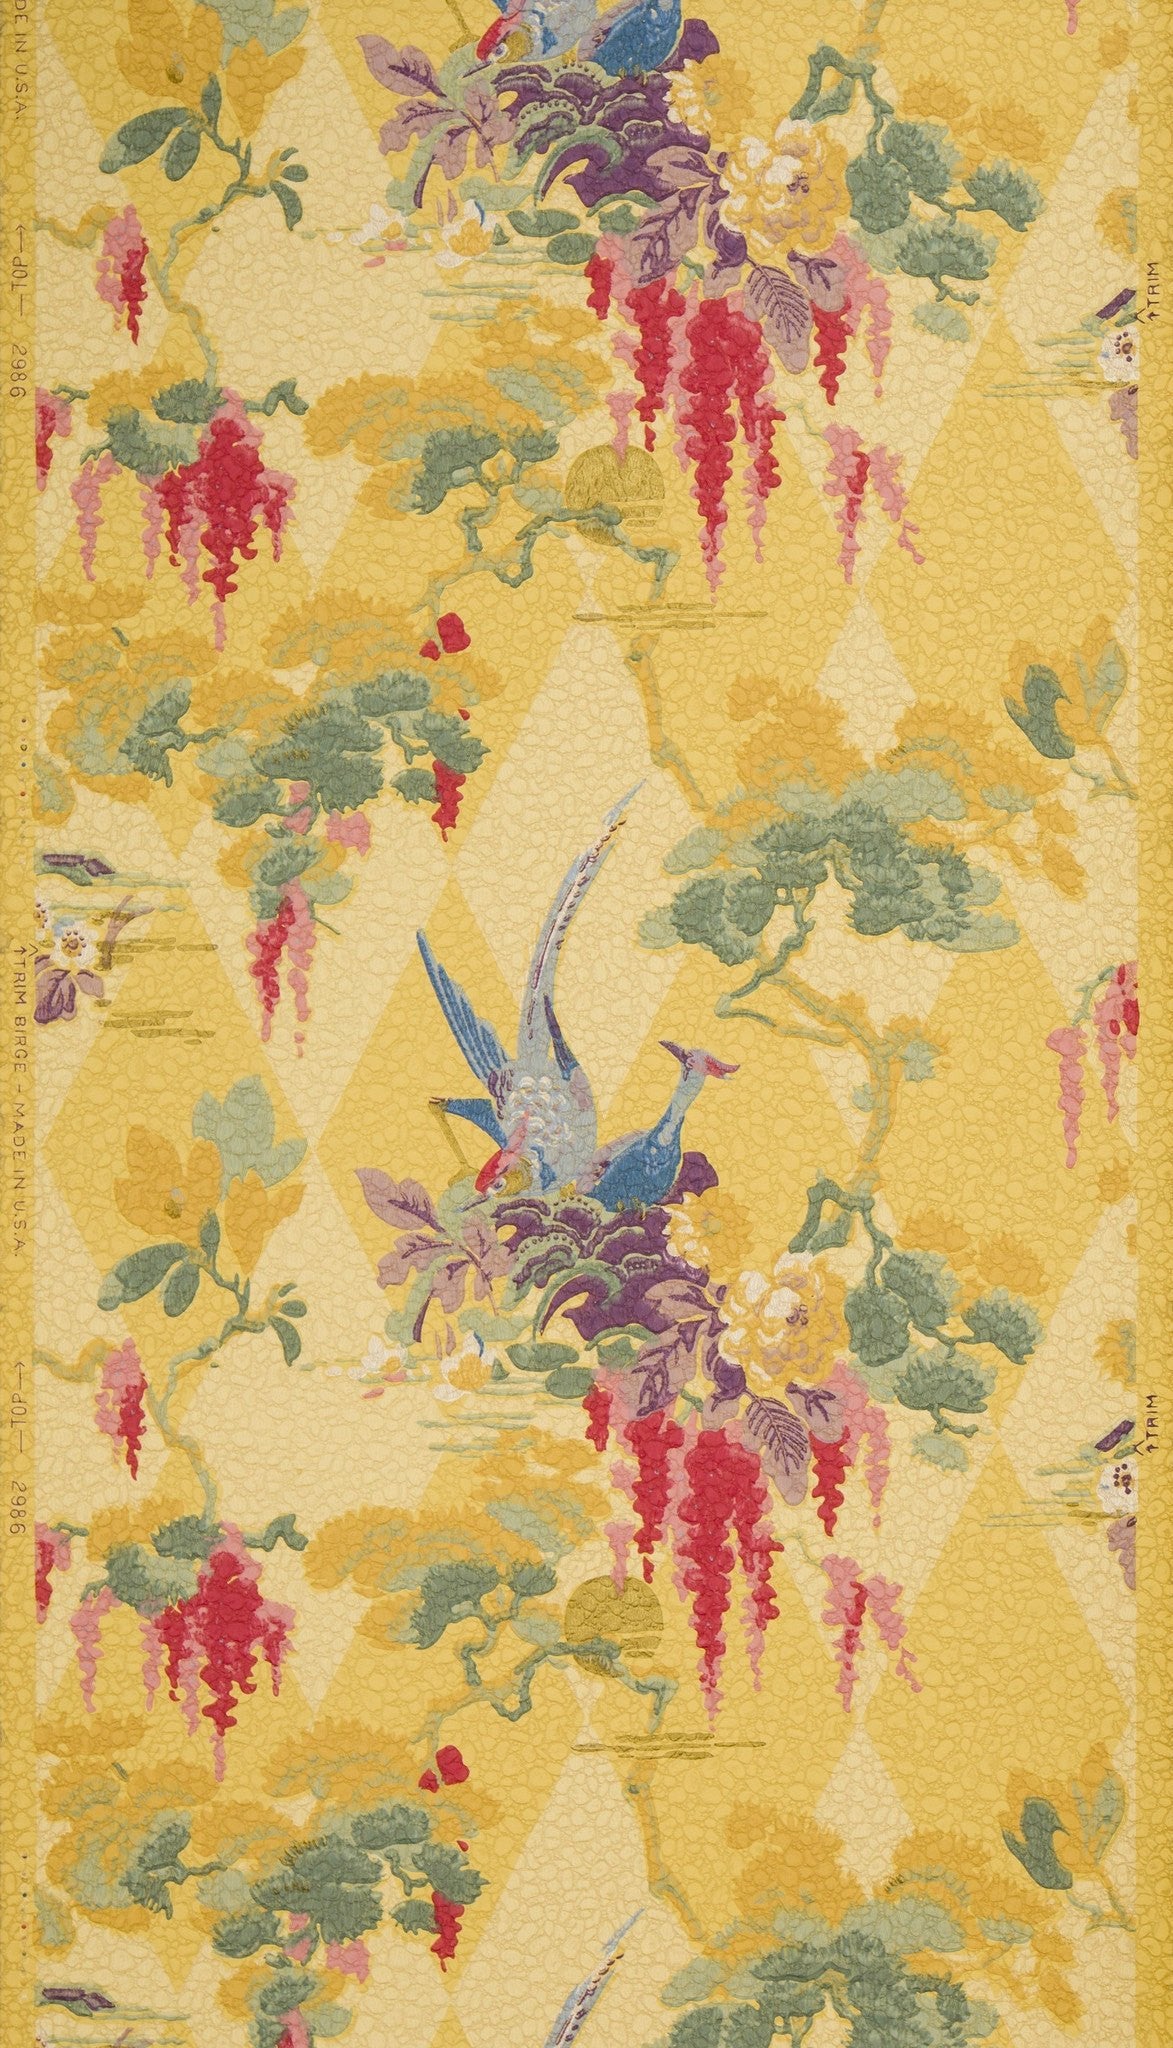 Exotic Birds/Flowers, Gilt Sun, Harlequin Motif - Antique Wallpaper Remnant